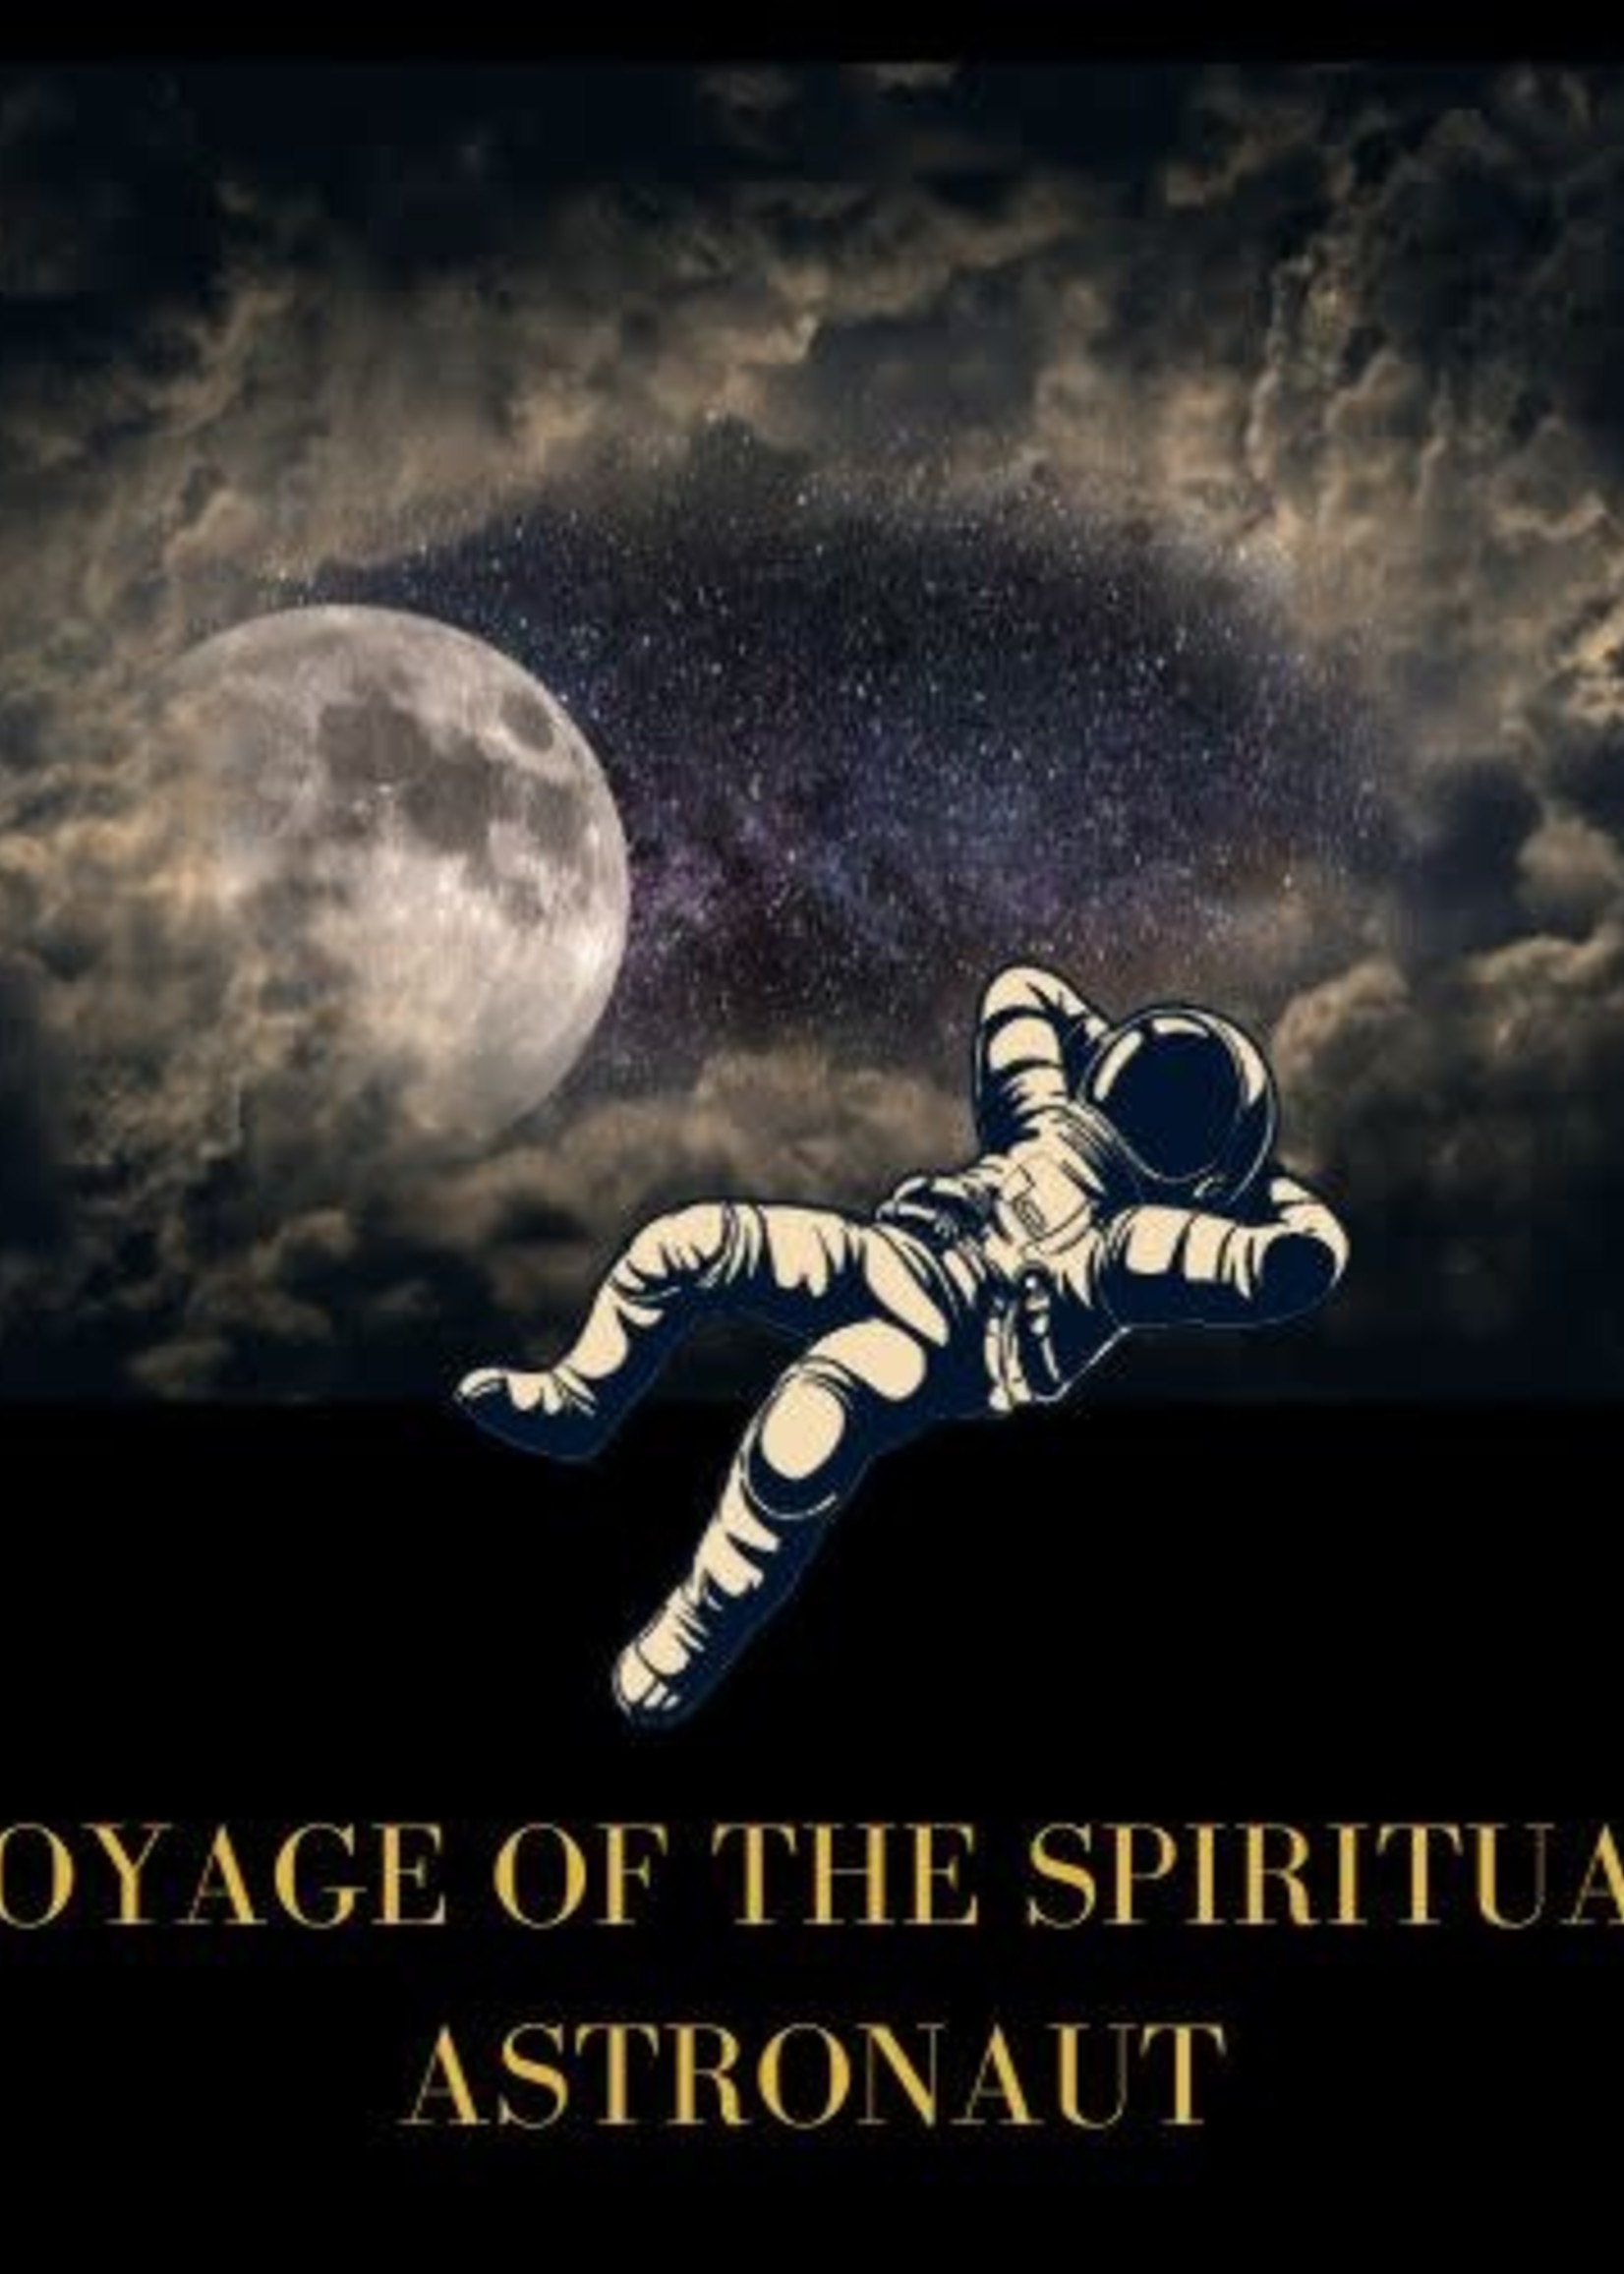 VOYAGE OF THE SPIRITUAL ASTRONAUT